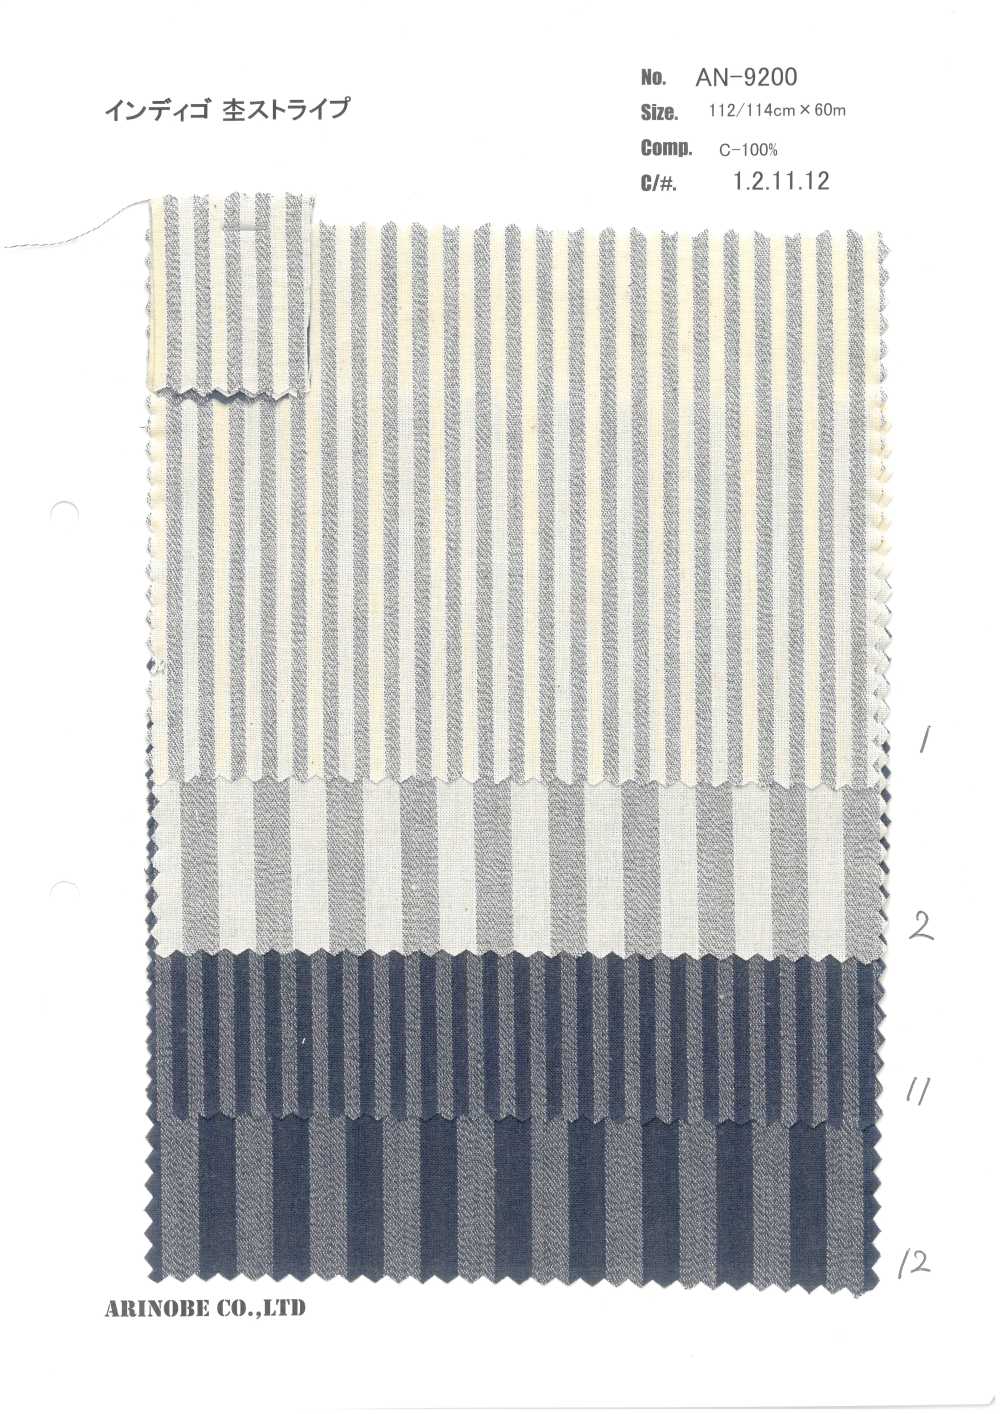 AN-9200 Indigo Heather Stripe[Textile / Fabric] ARINOBE CO., LTD.